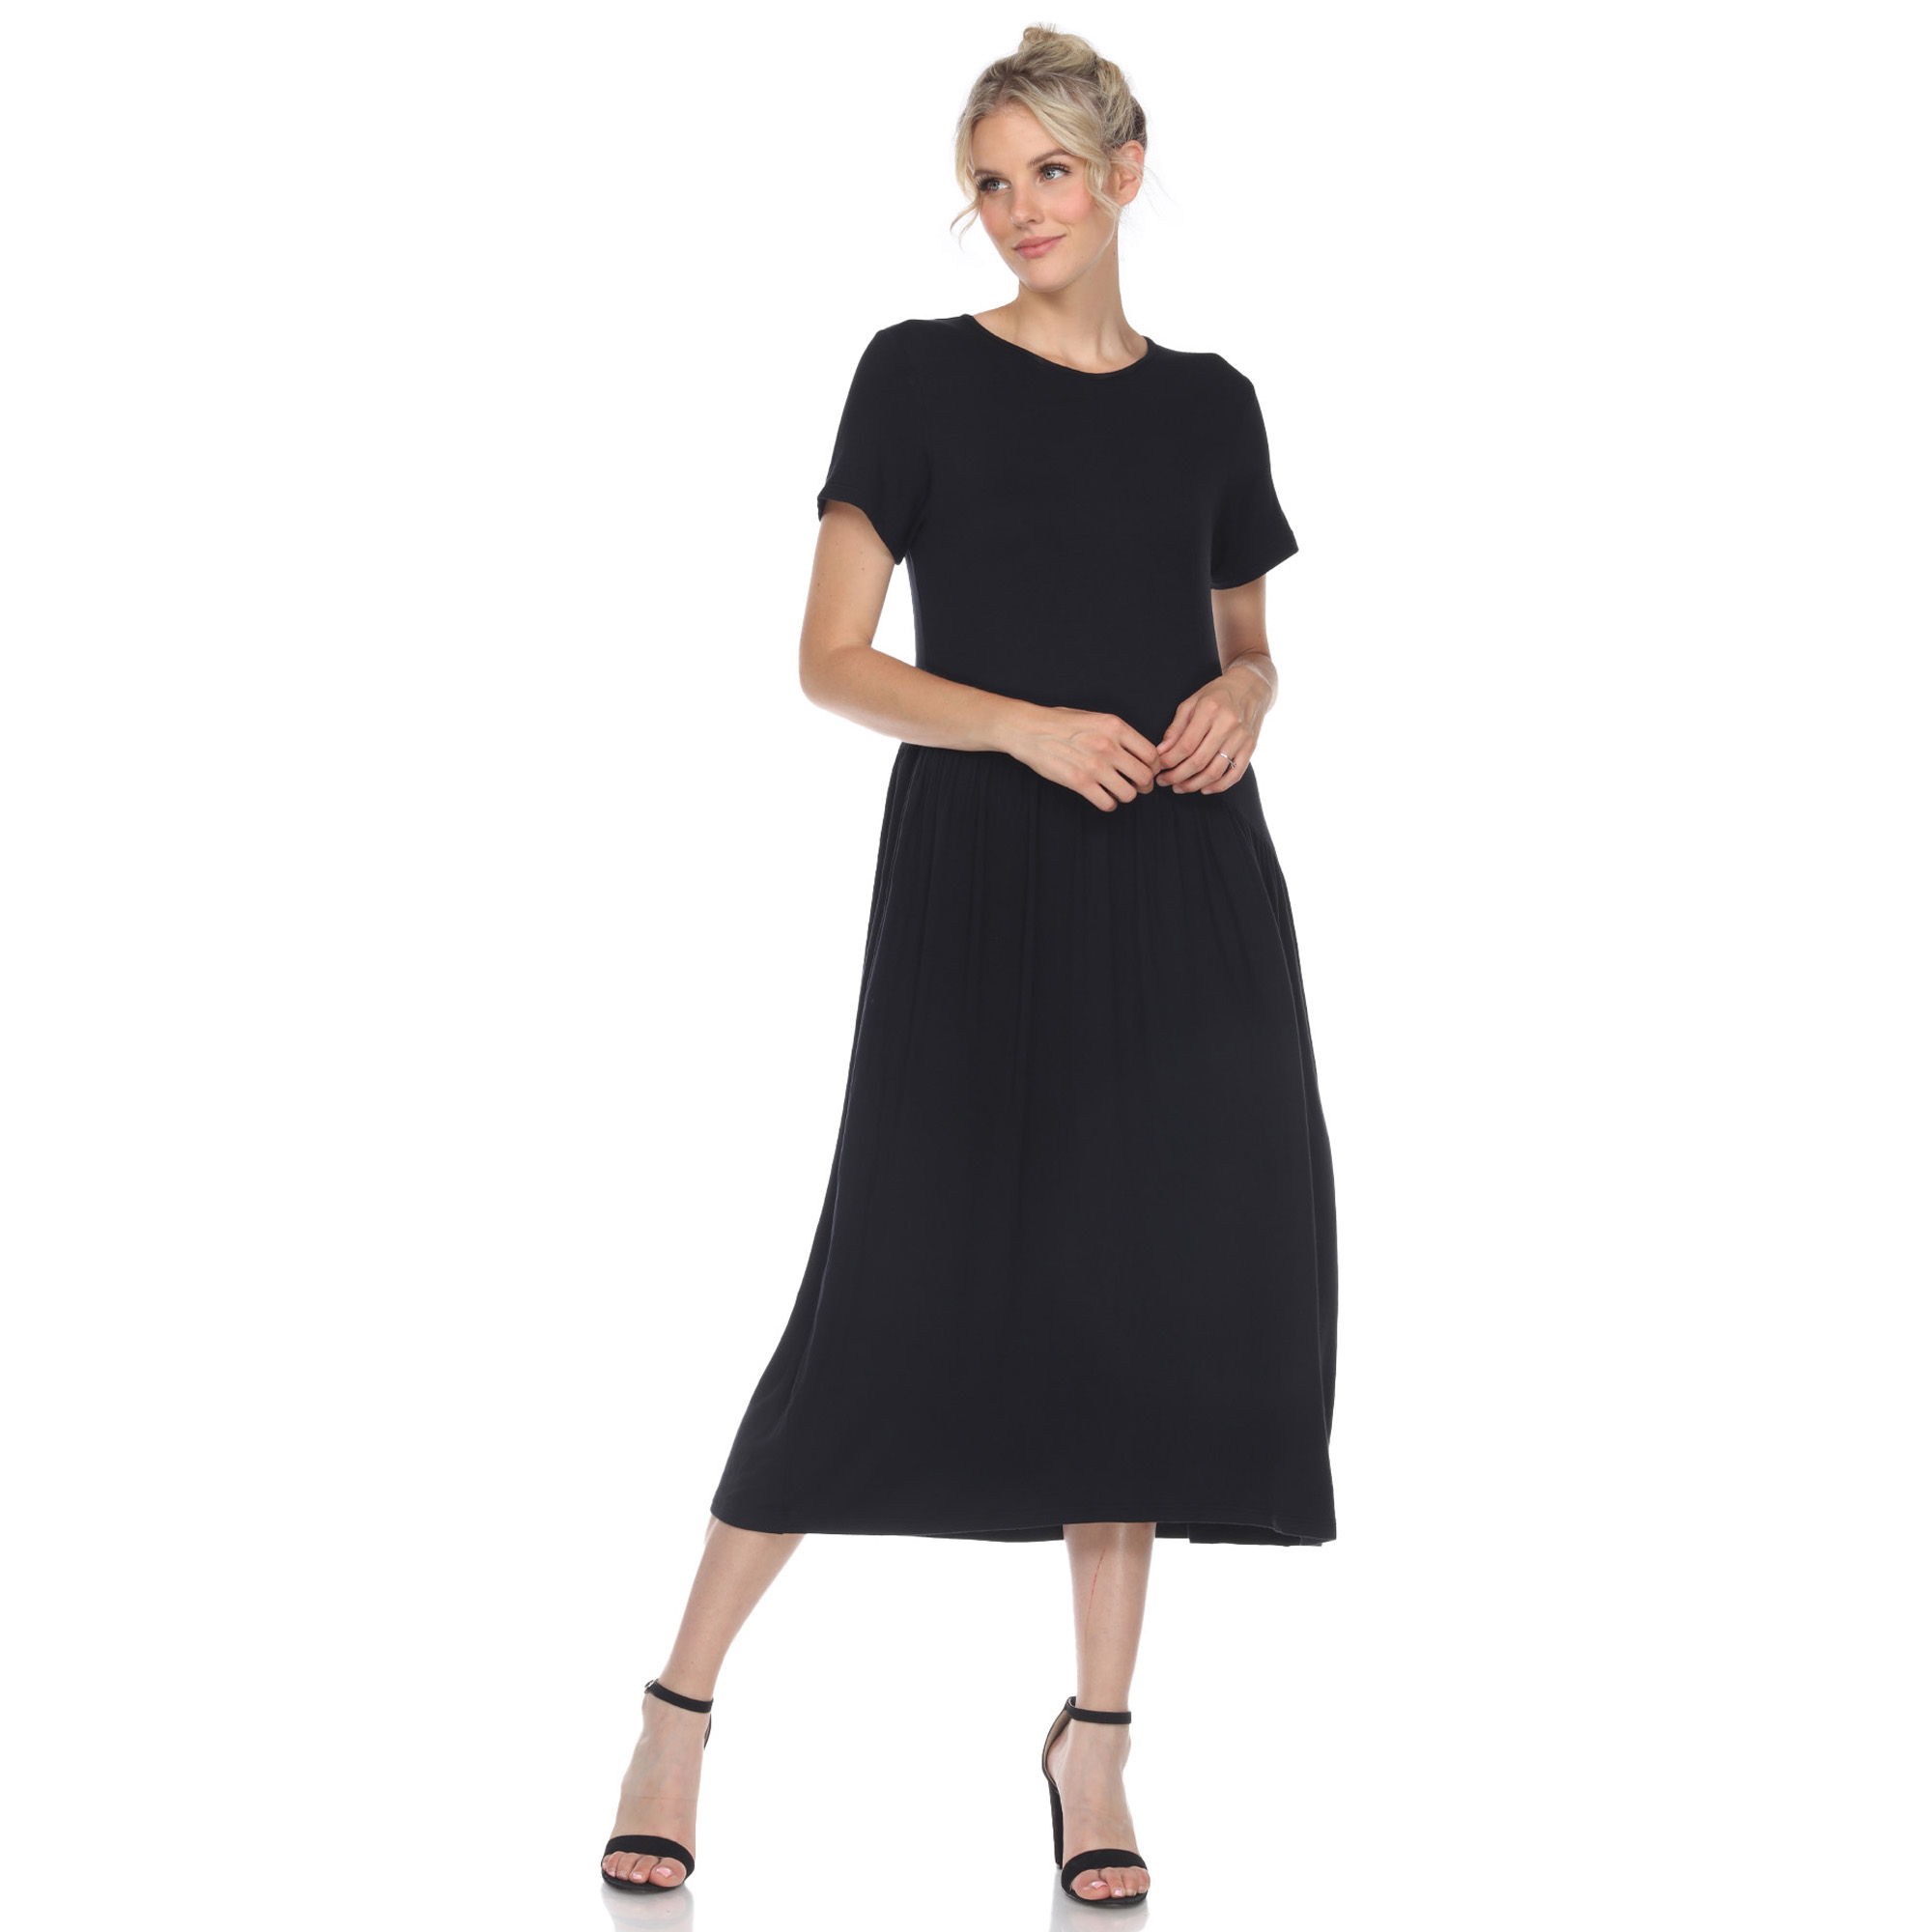 White Mark Womenâs Short Sleeve Maxi Dress - Black, Small